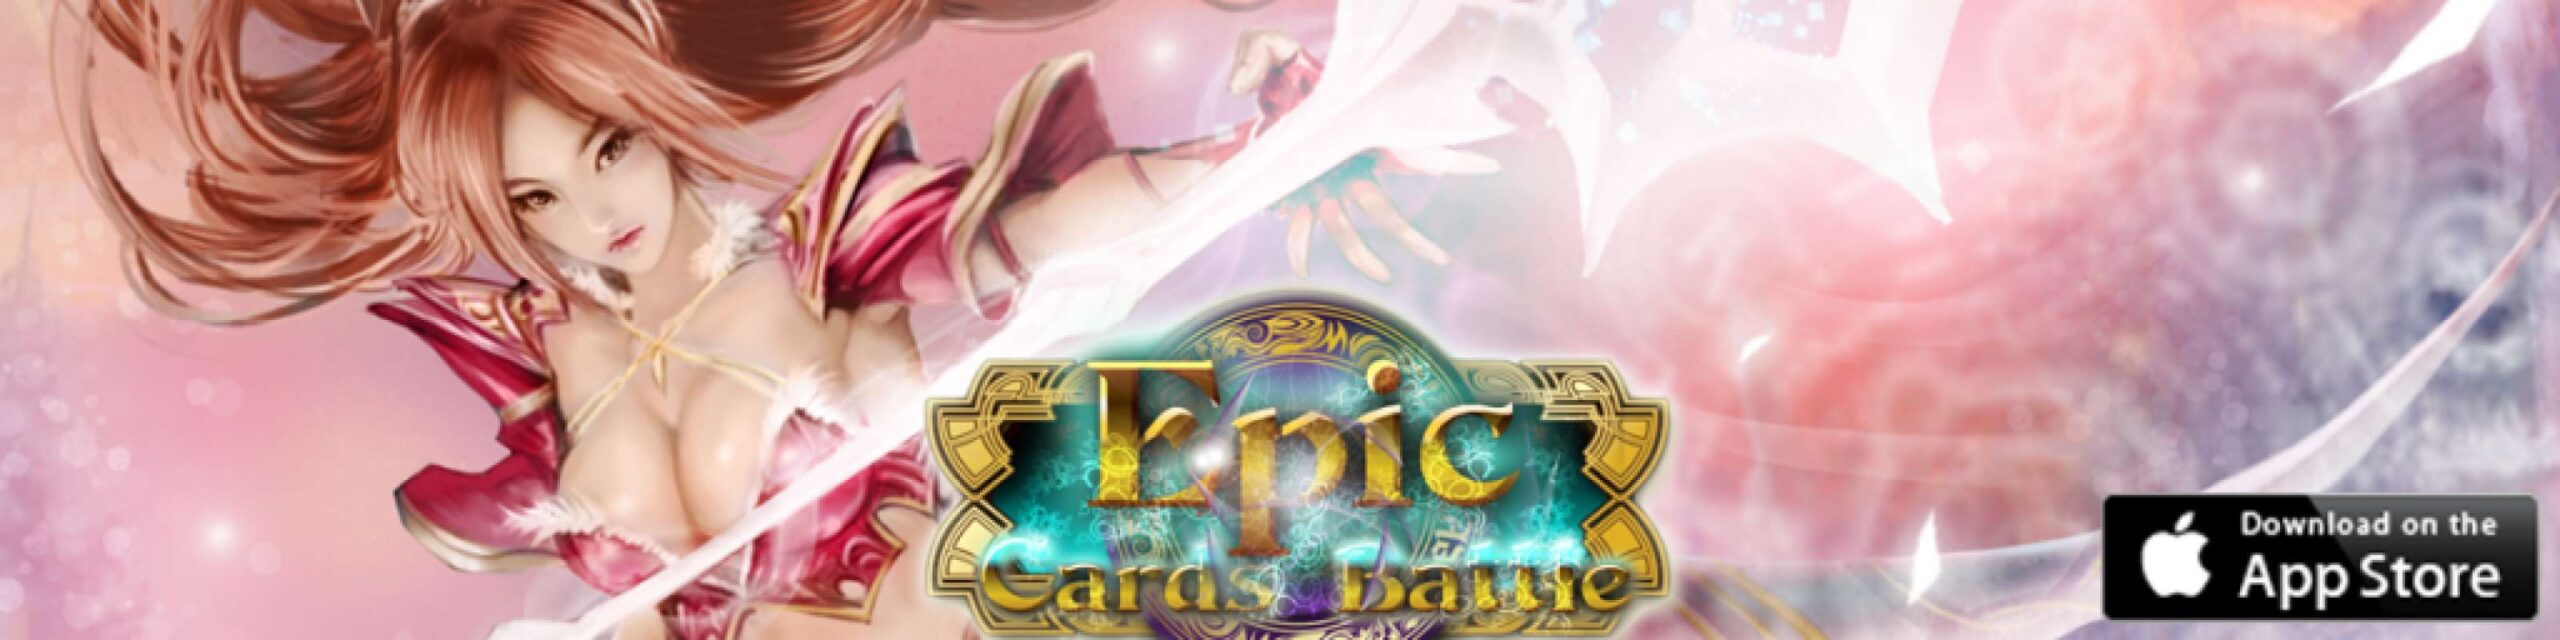 Epic Cards Battle